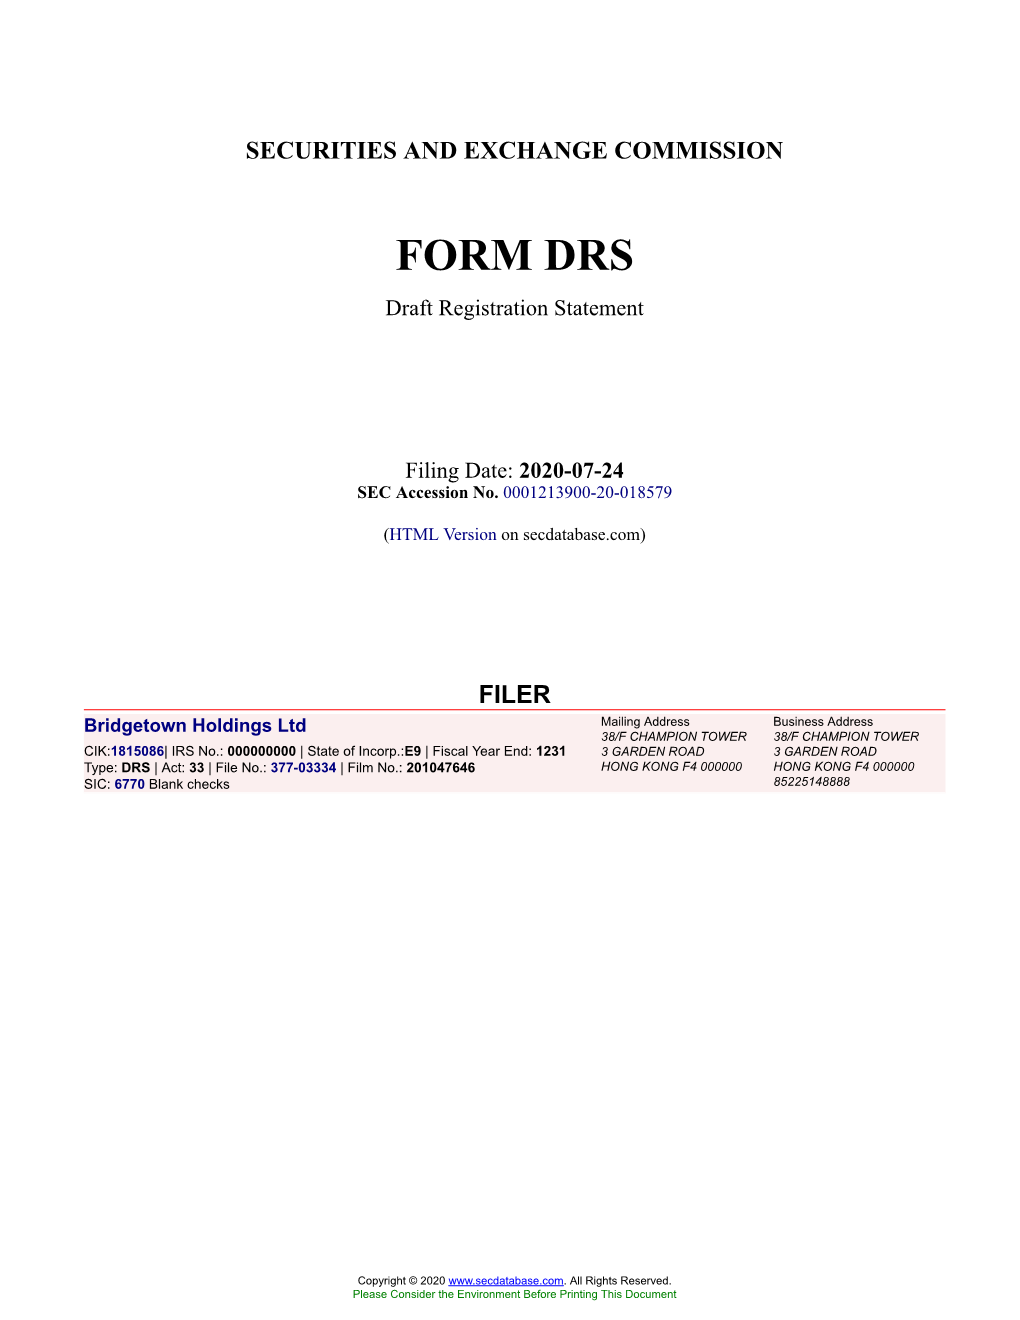 Bridgetown Holdings Ltd Form DRS Filed 2020-07-24